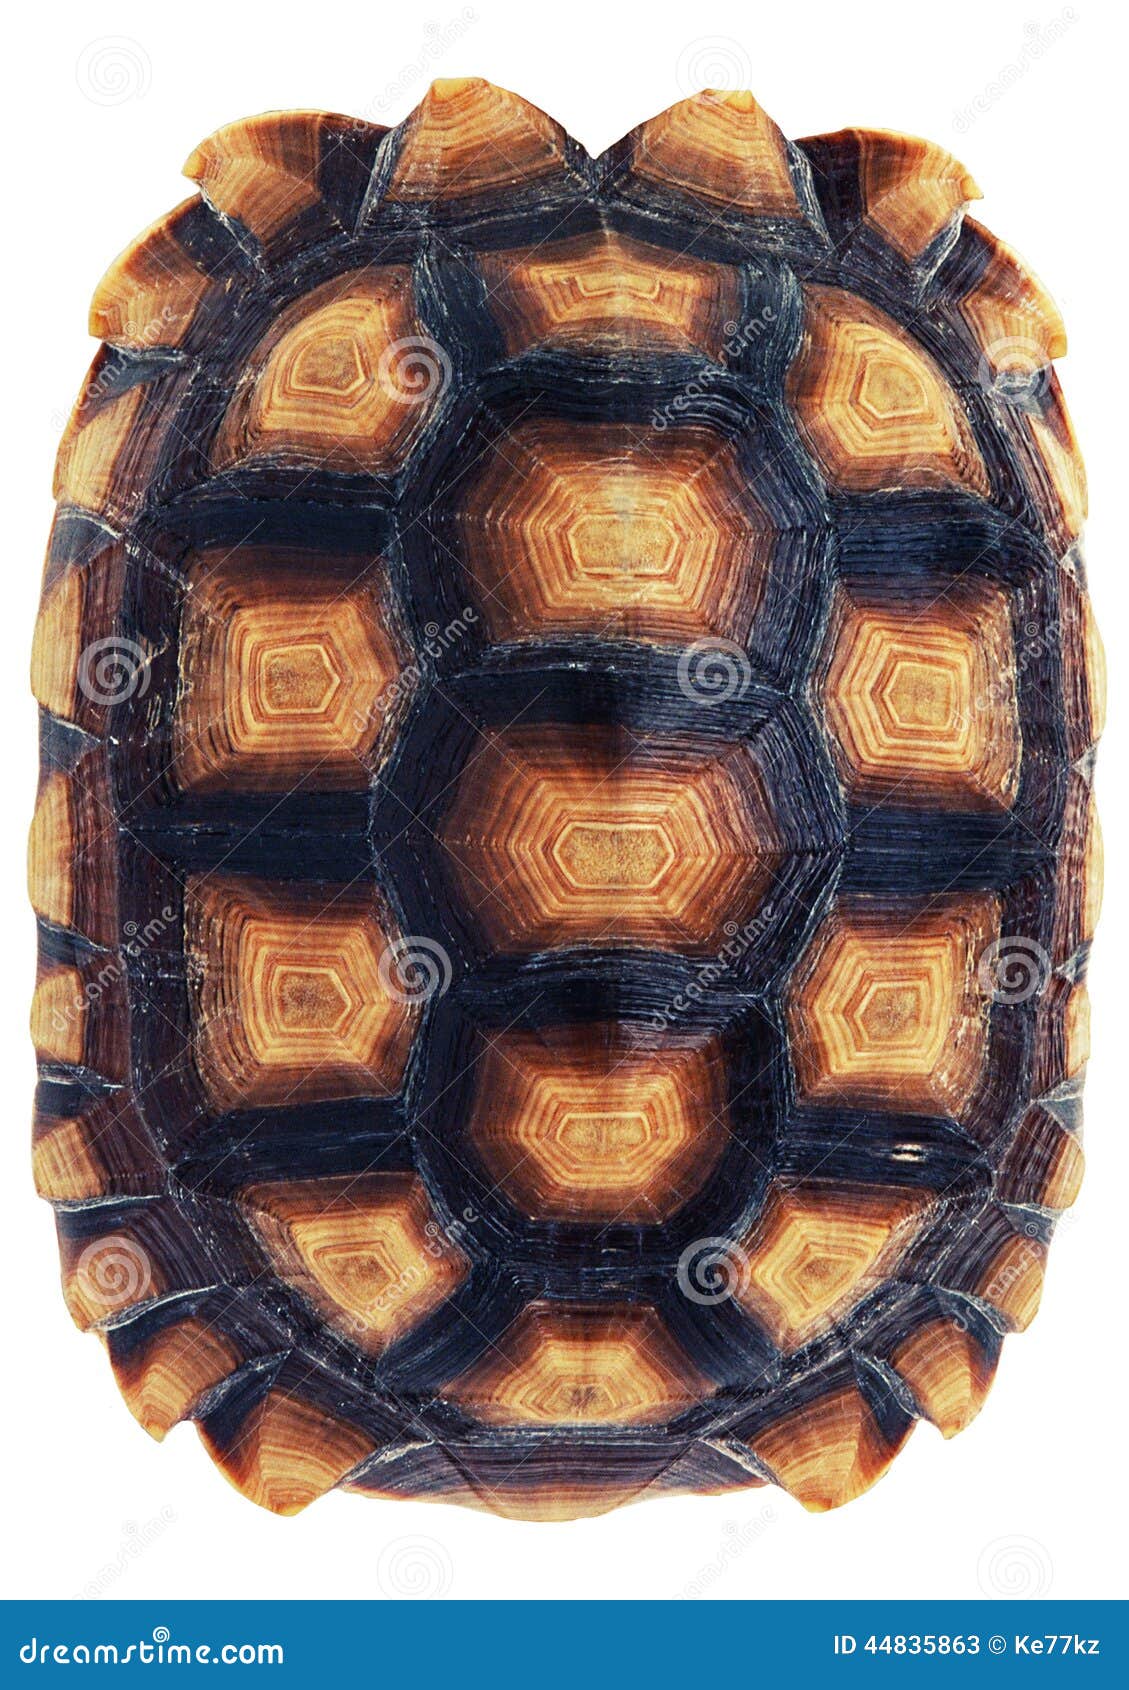 6,040 Tortoise Shell Isolated Stock Photos - Free & Royalty-Free